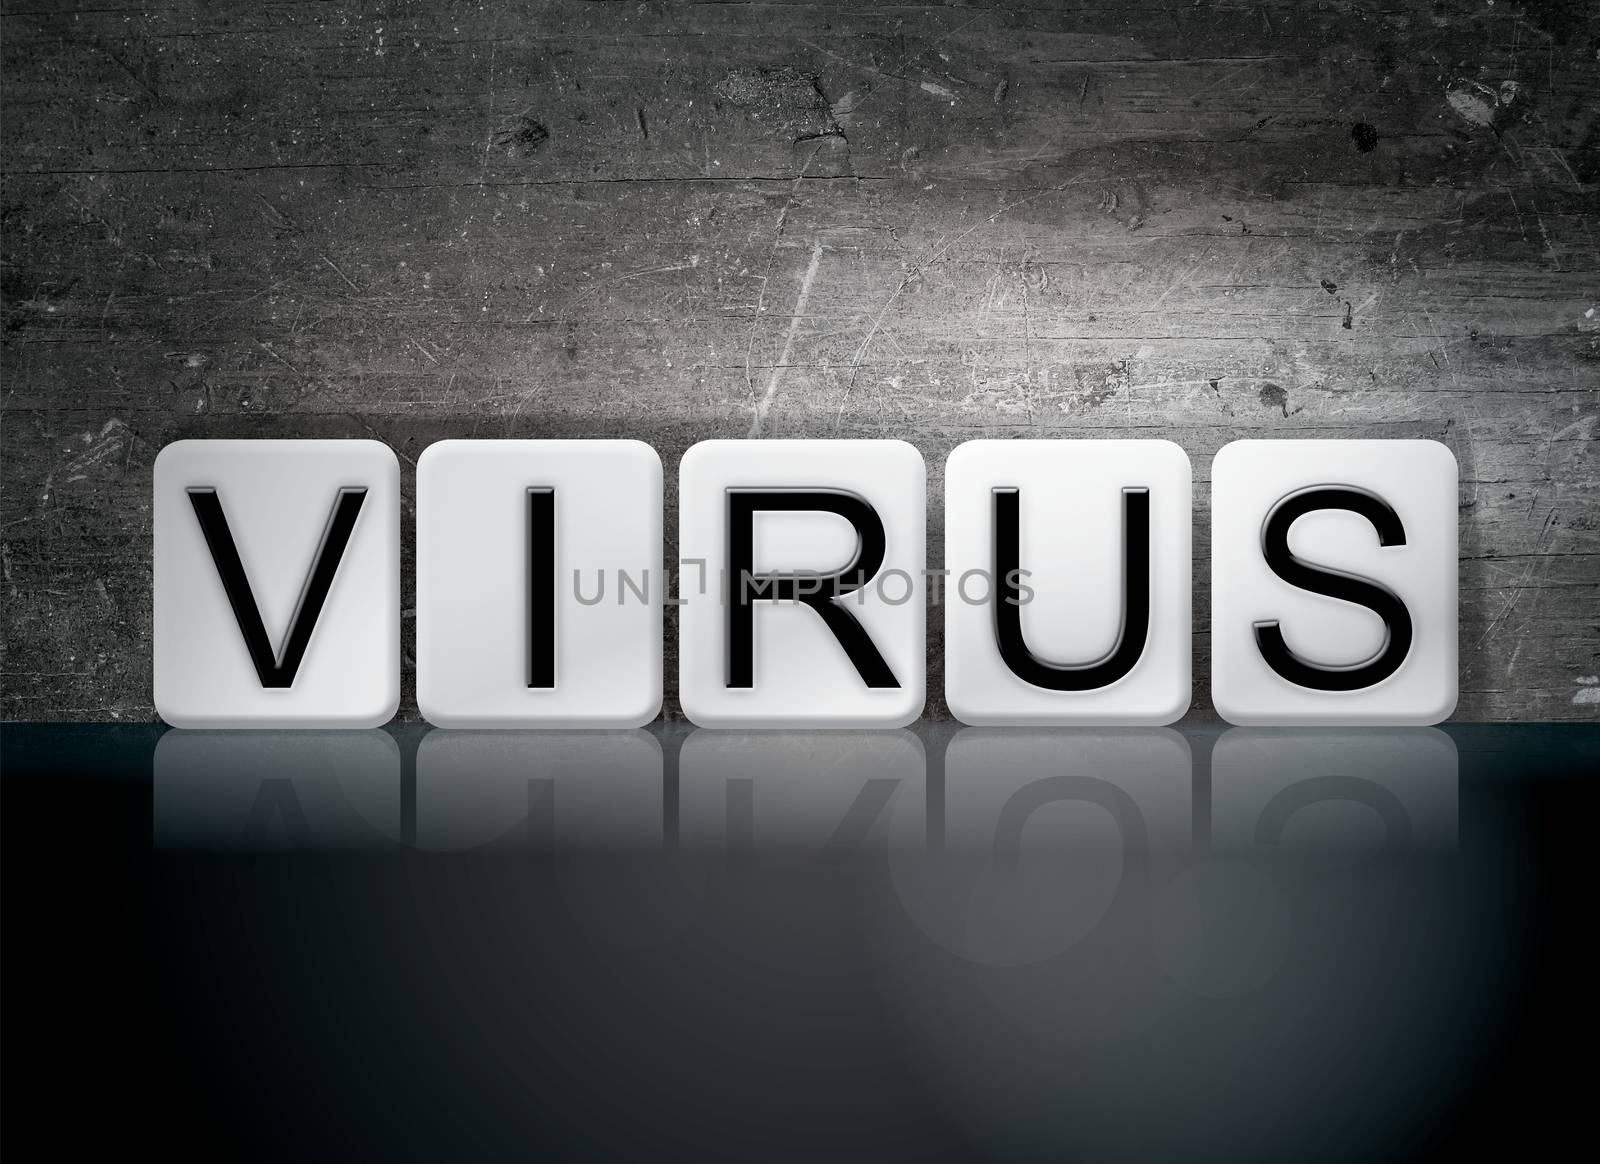 The word "Virus" written in white tiles against a dark vintage grunge background.